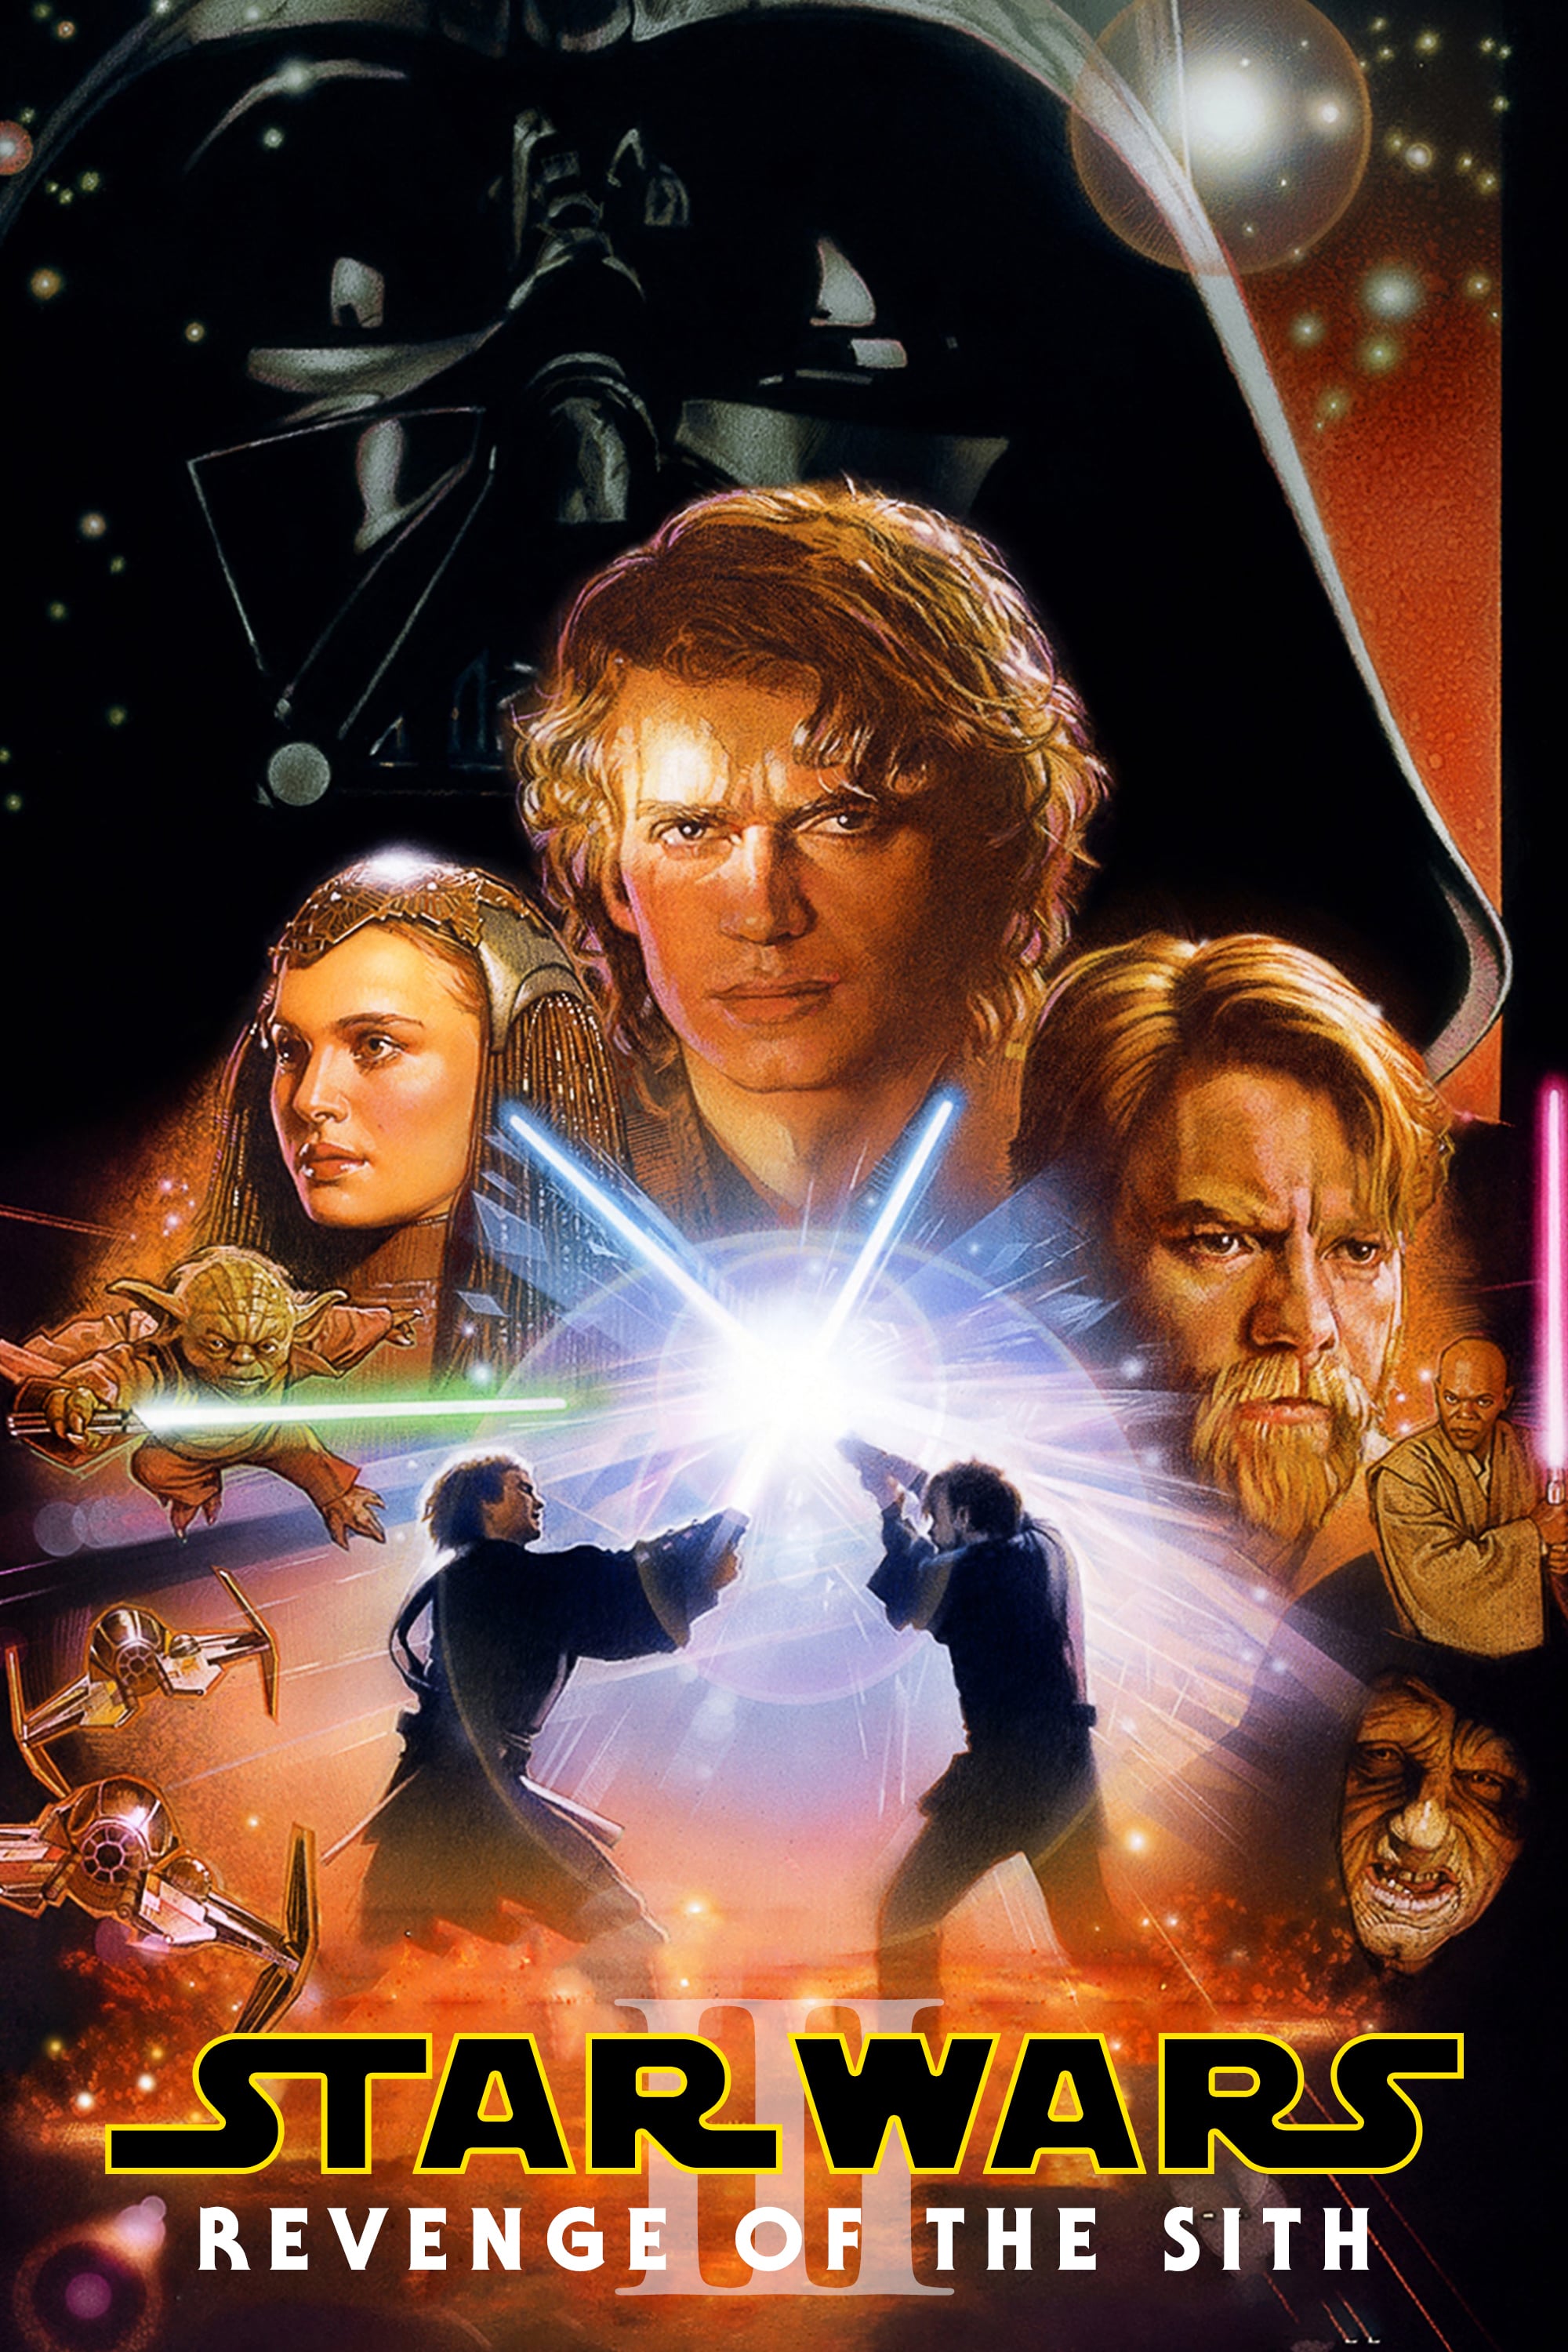 Star Wars Ep. III: Revenge of the Sith downloading